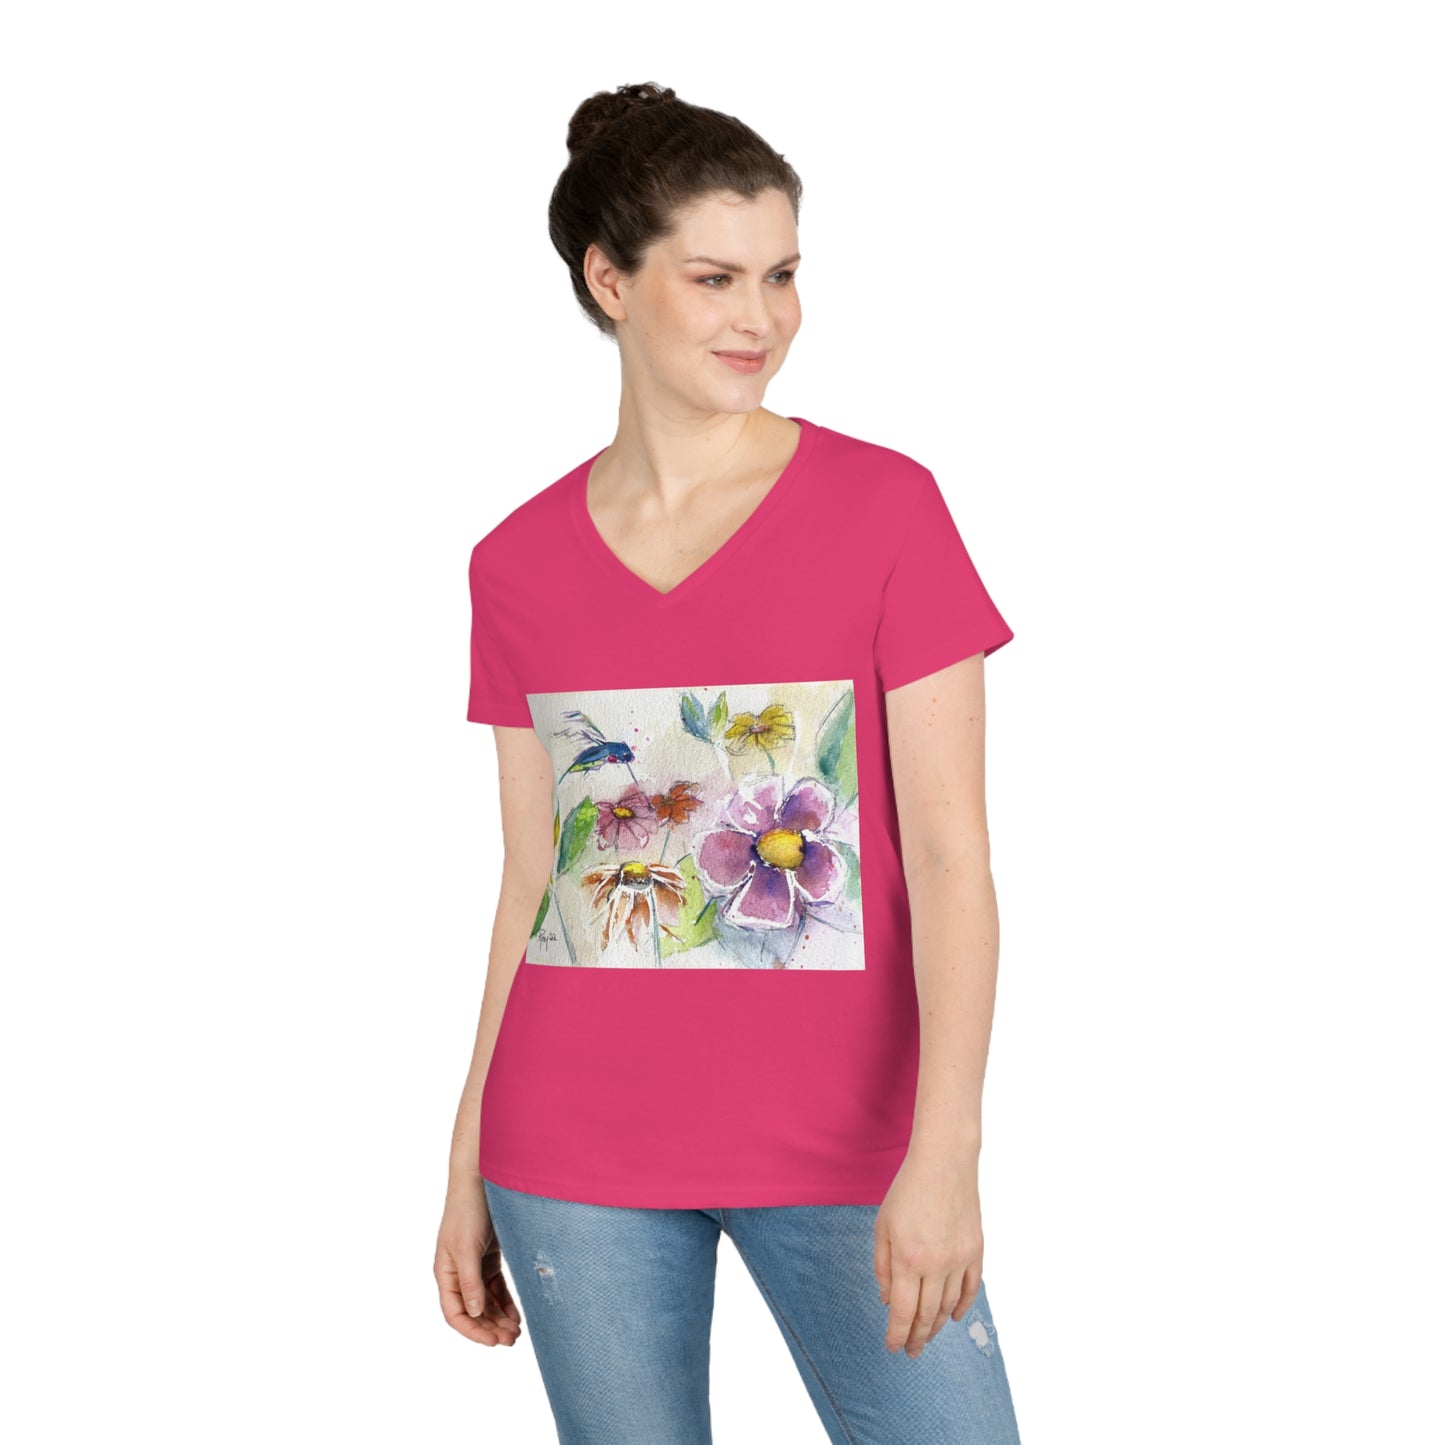 Hummingbird in the Flower Garden Ladies' V-Neck T-Shirt